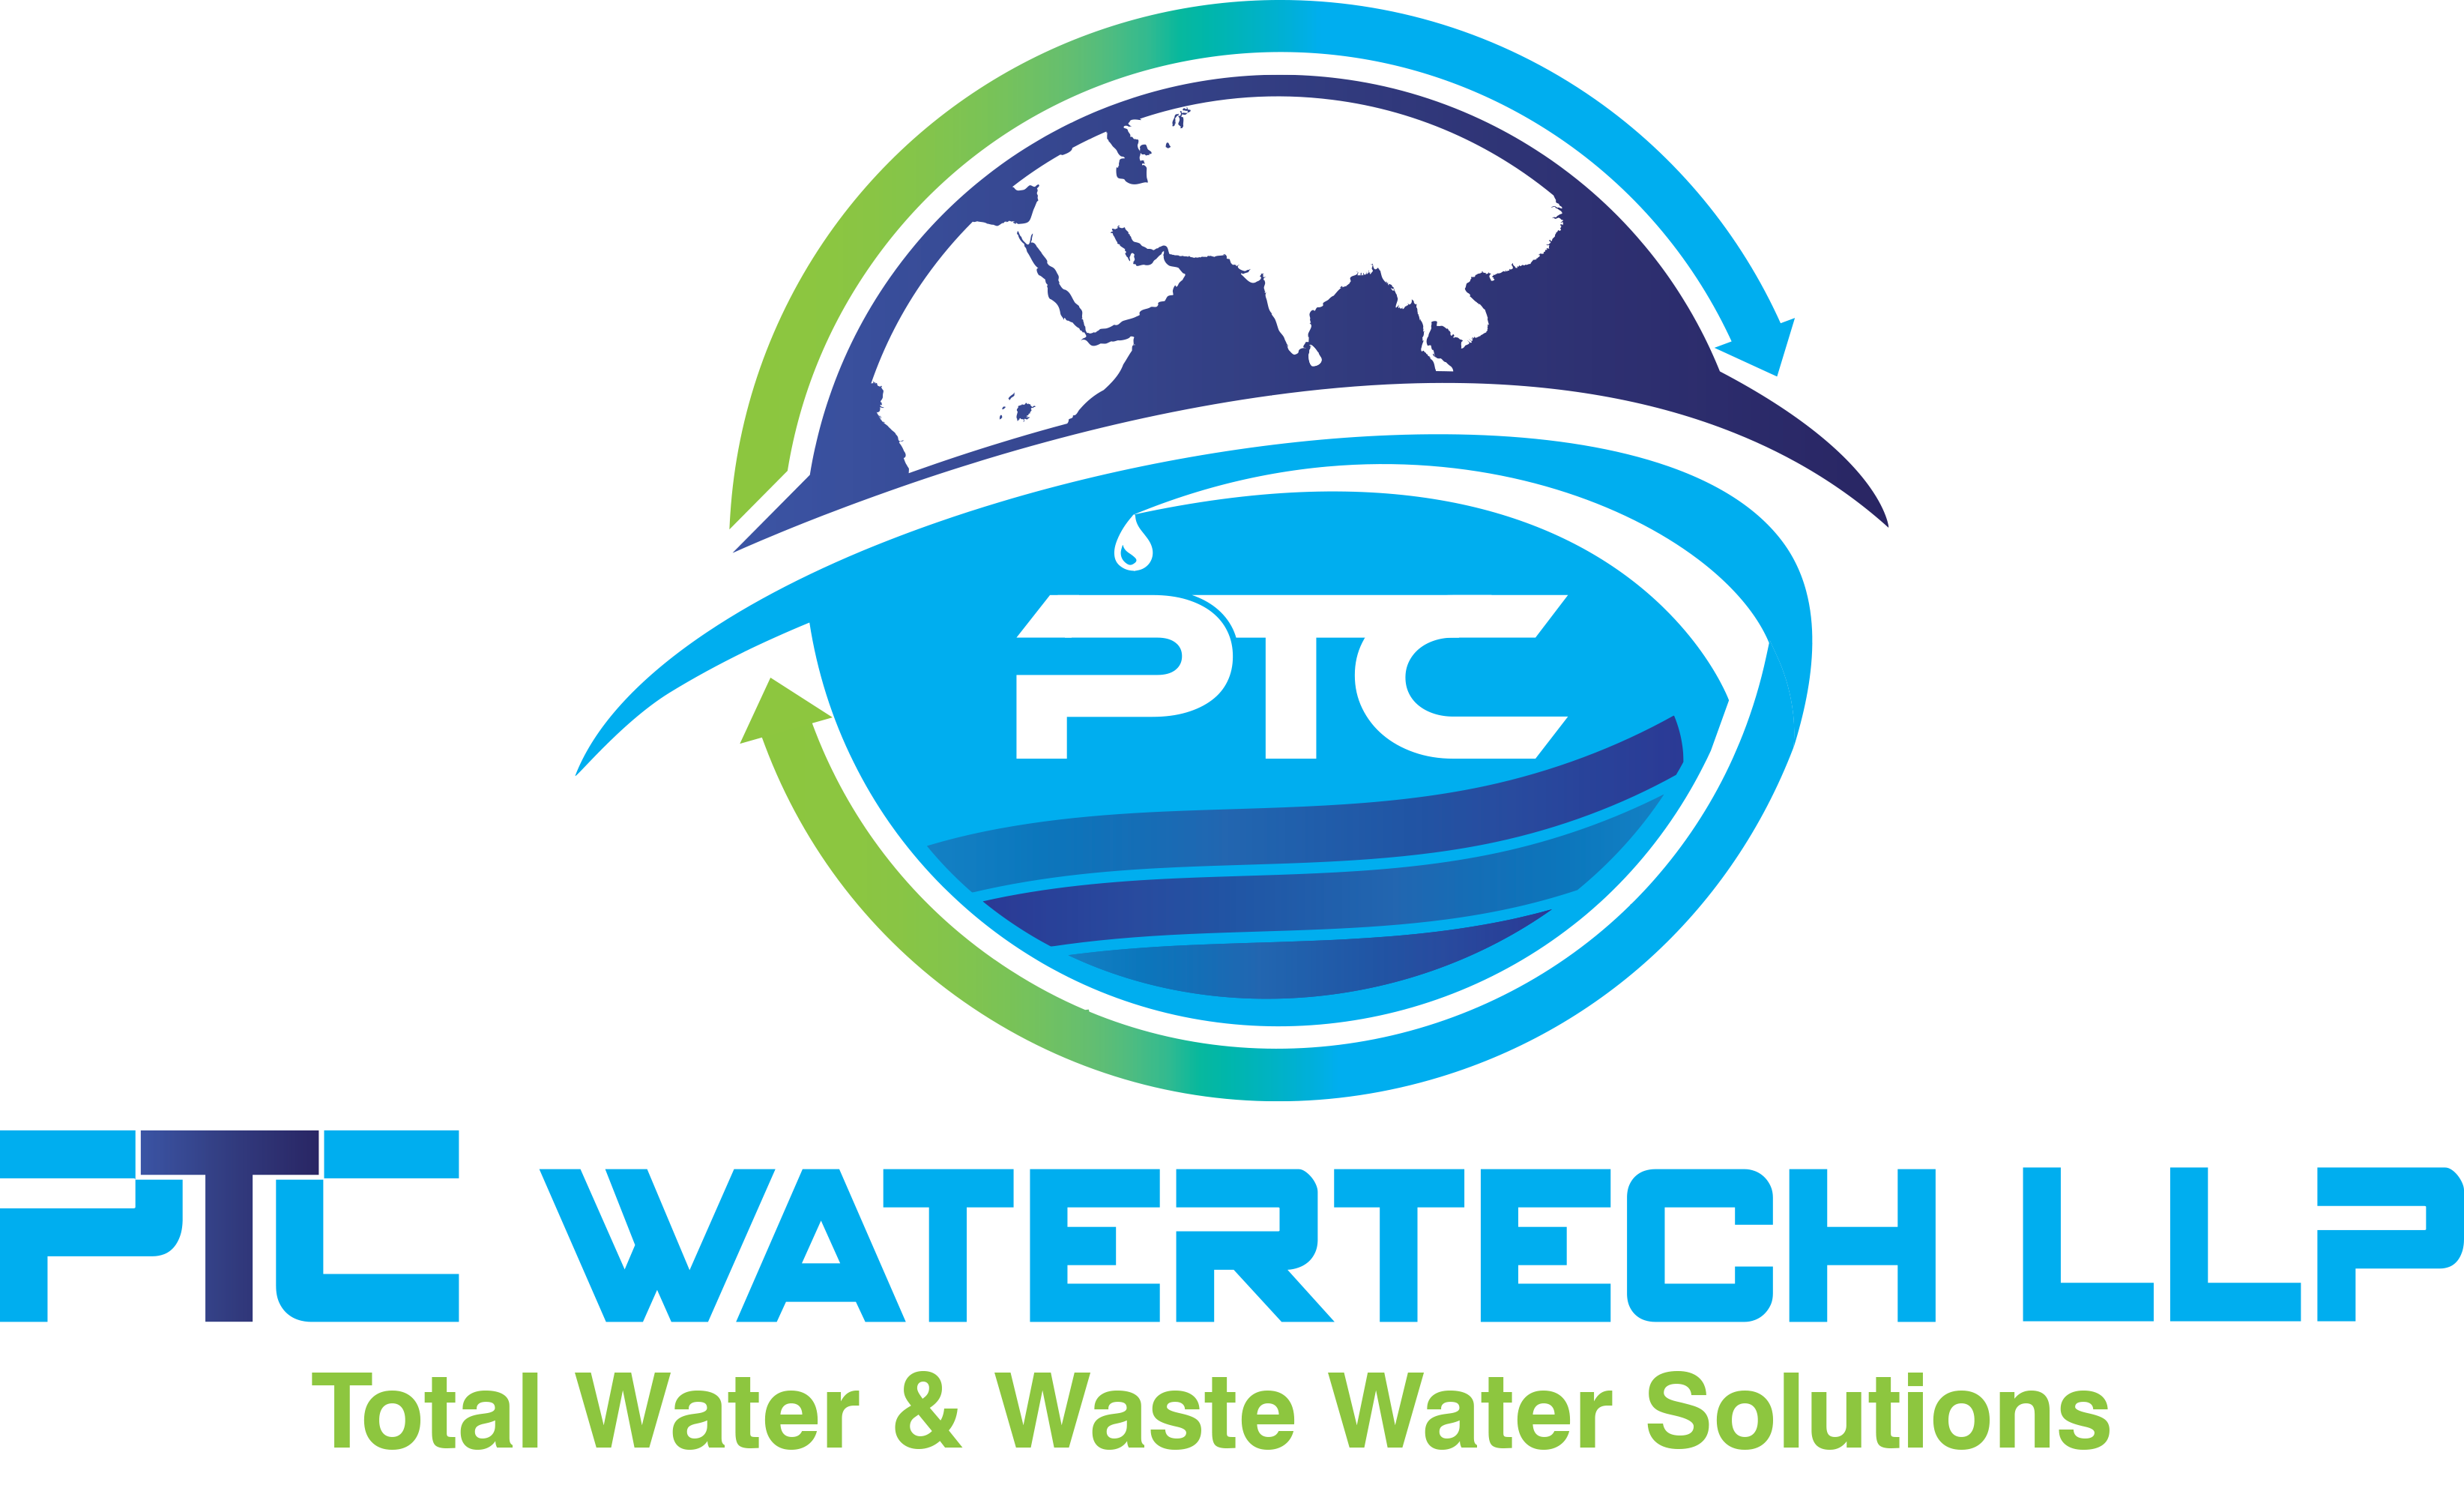 PTC Watertech